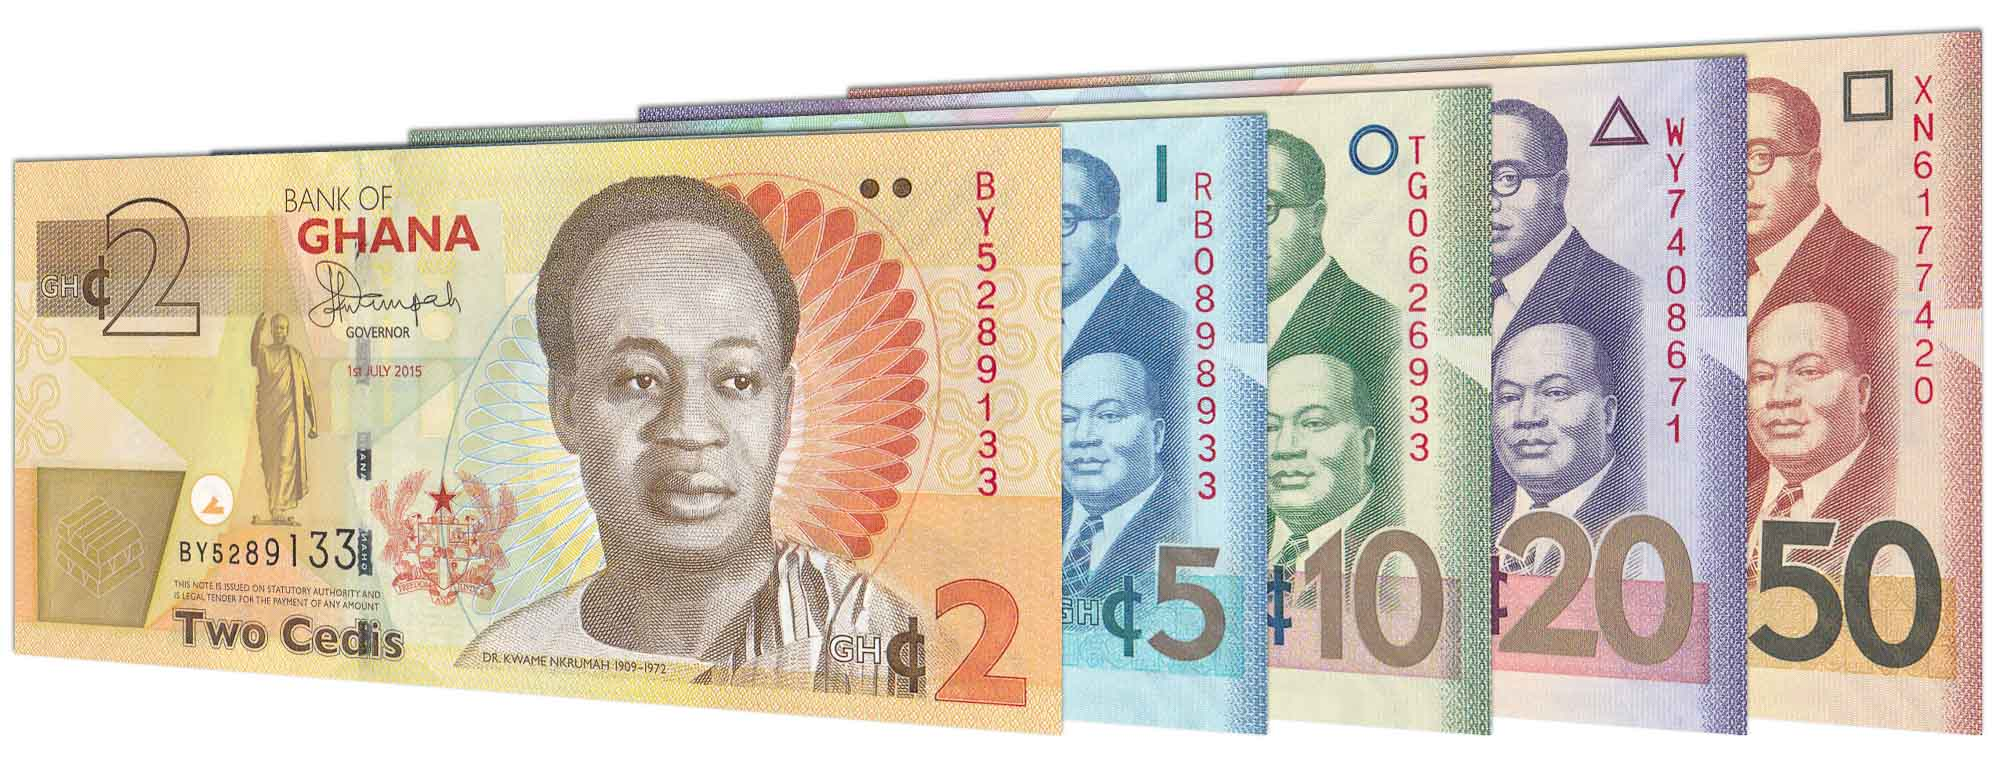 Ghana Currency (Ghanaian Cedi) Currency of Ghana 1